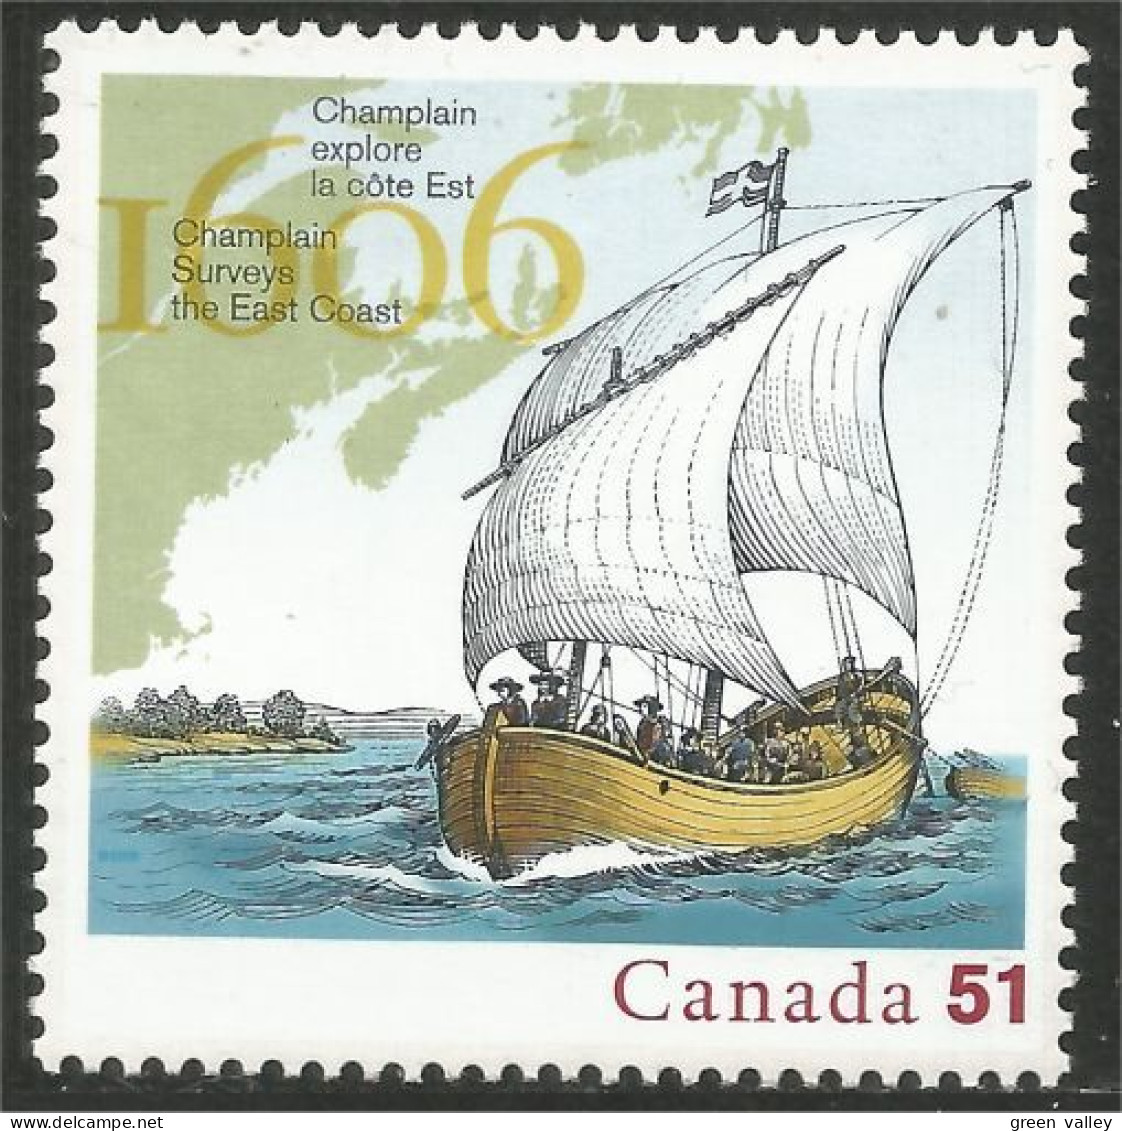 Canada Champlain Voilier Sailing Ship Boat Segel Schiff MNH ** Neuf SC (c21-55d) - Ponts